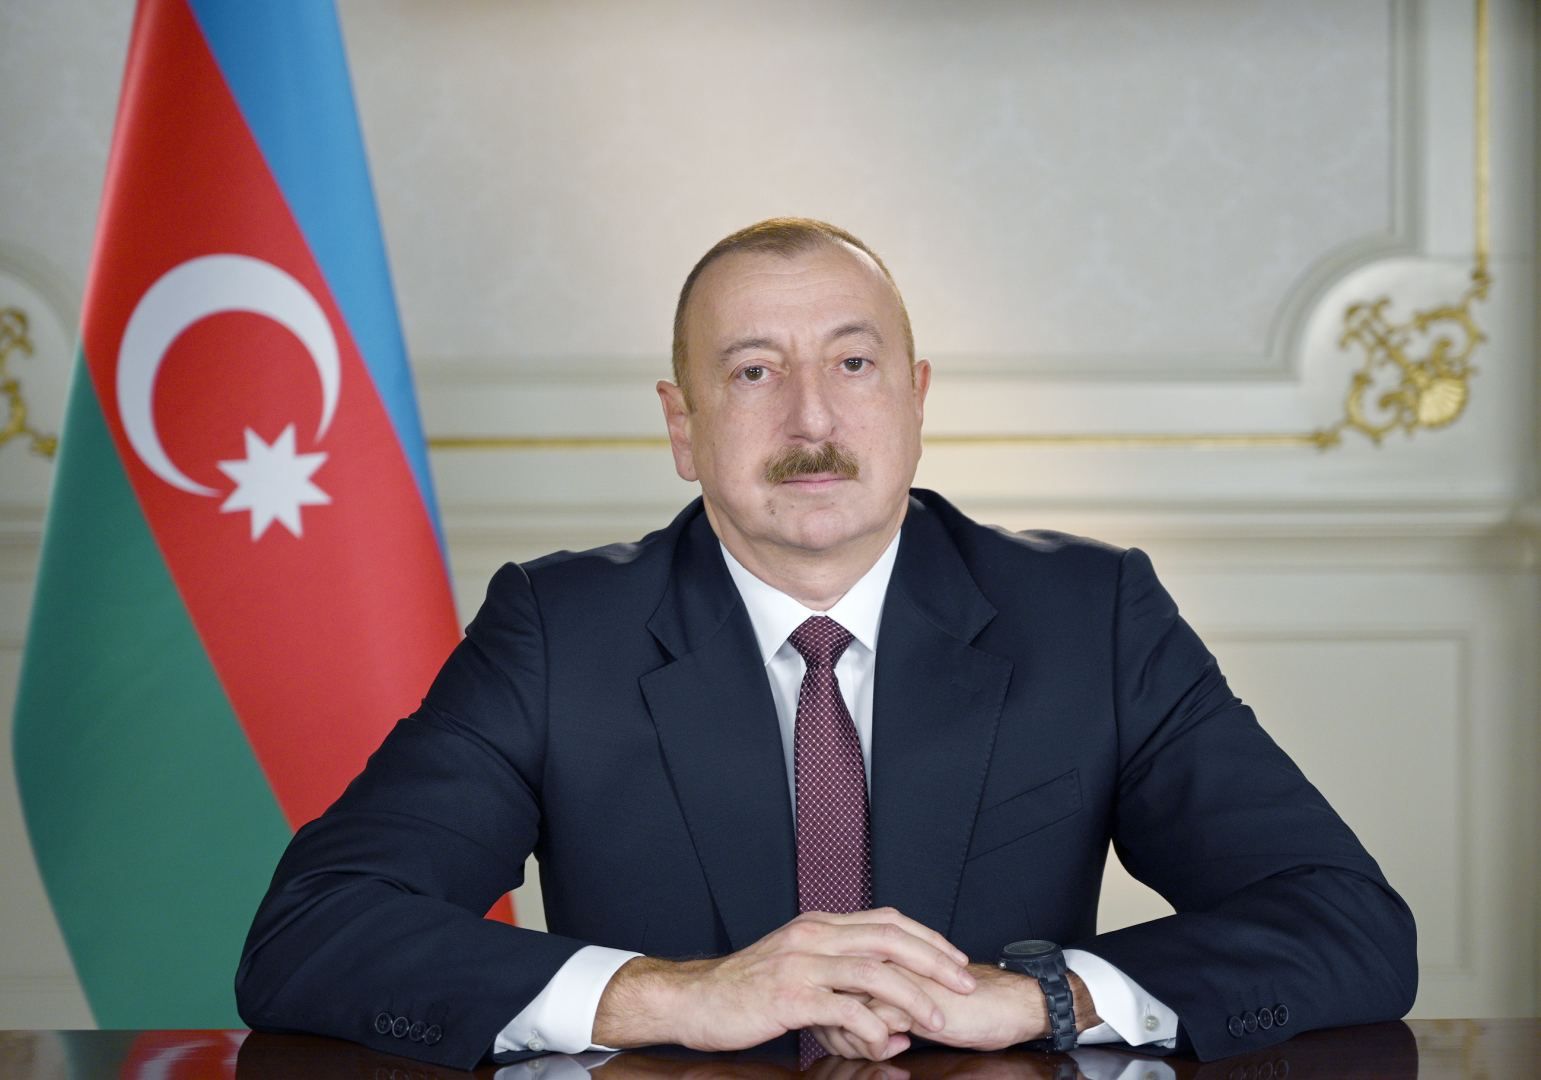 Art figures honored with Azerbaijani Republic President's Award - ORDER